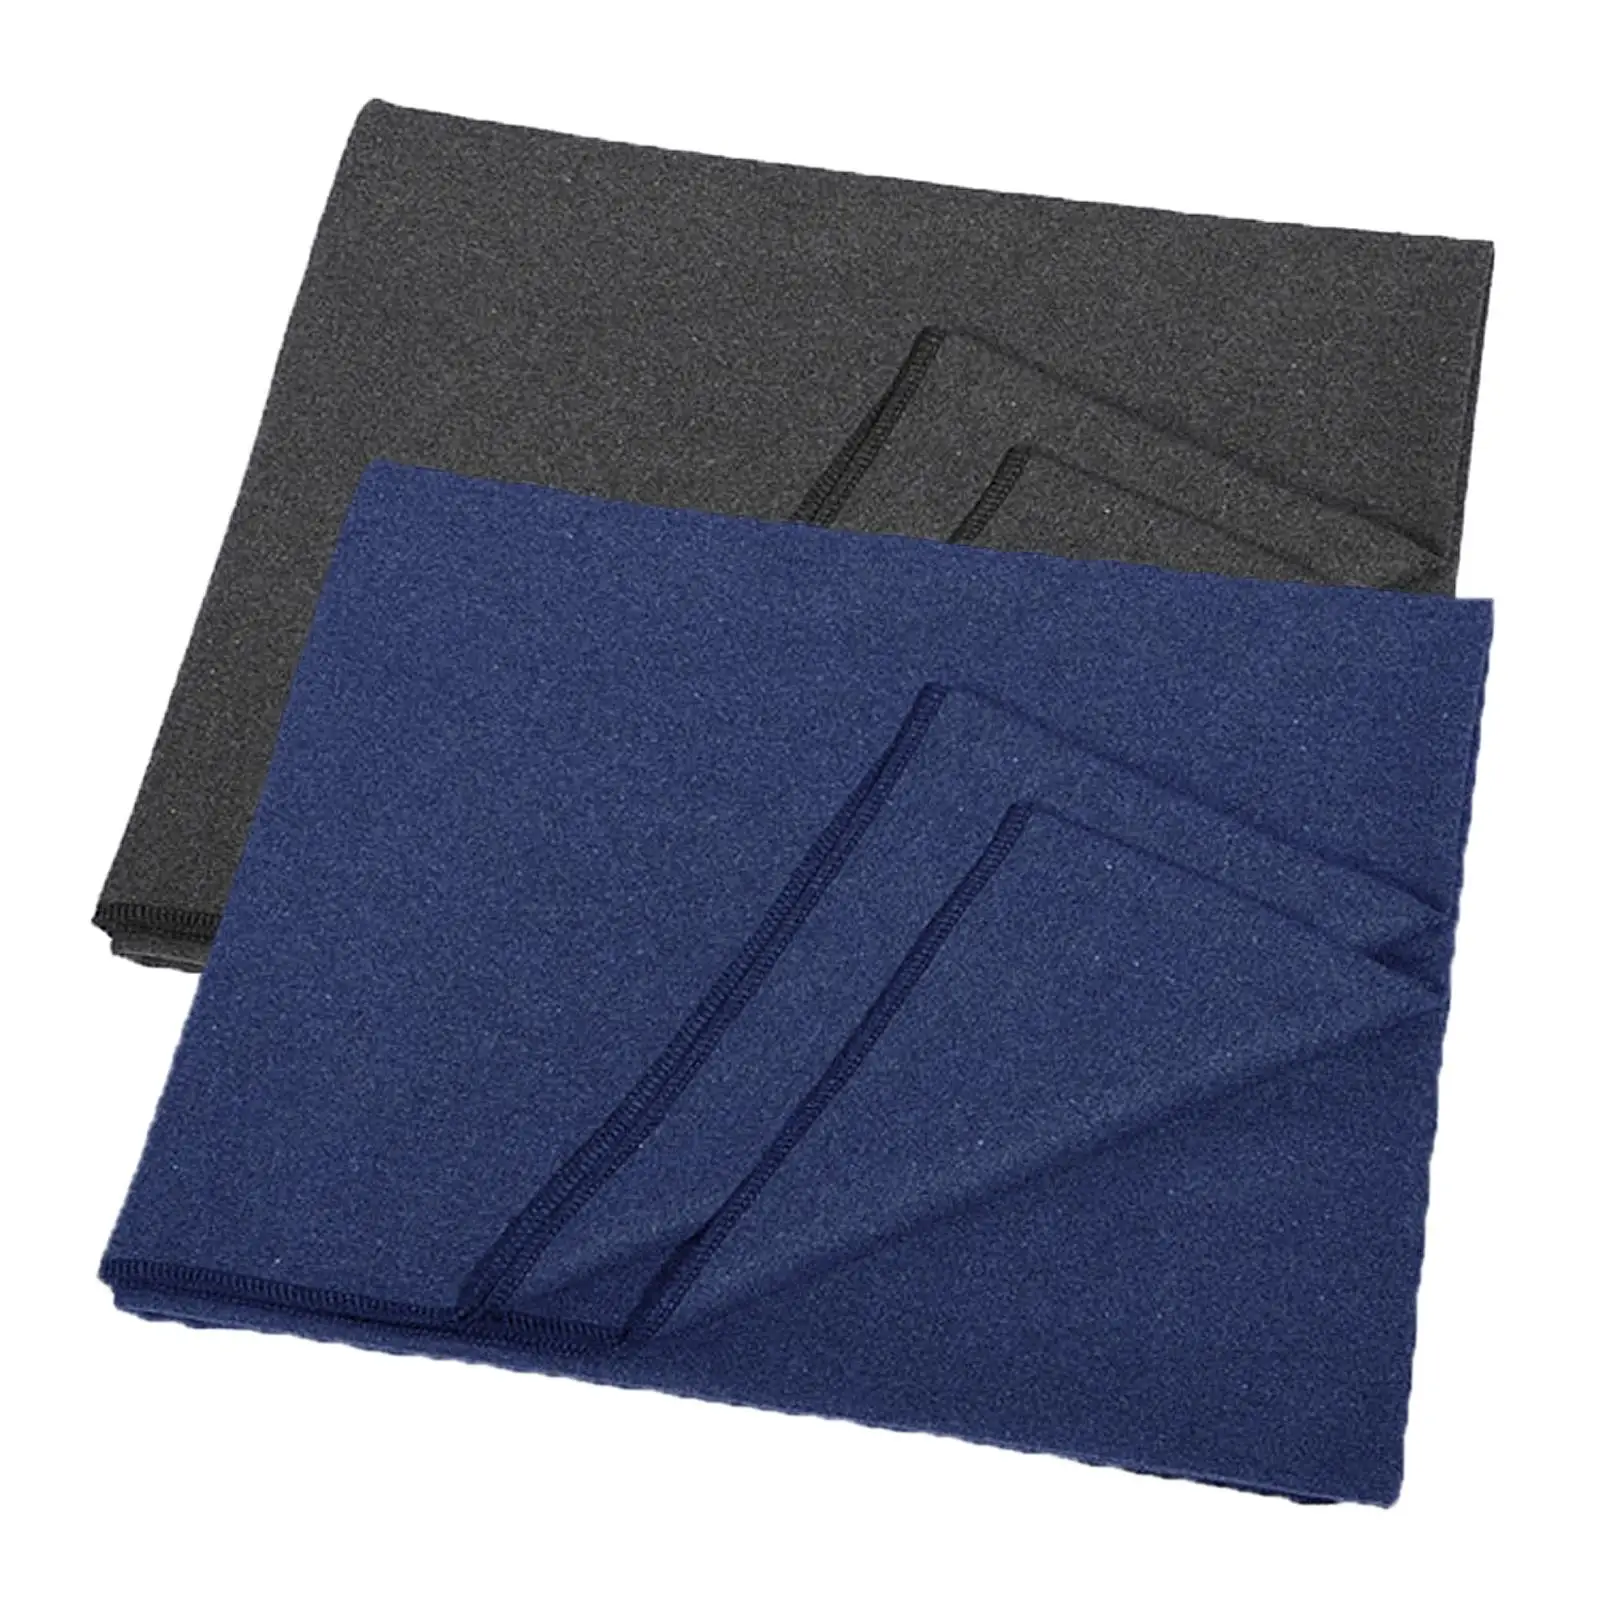 200x150cm Folded Yoga Mat Towel Soft Sweat Absorbent Comfortable Travel Camping Blanket